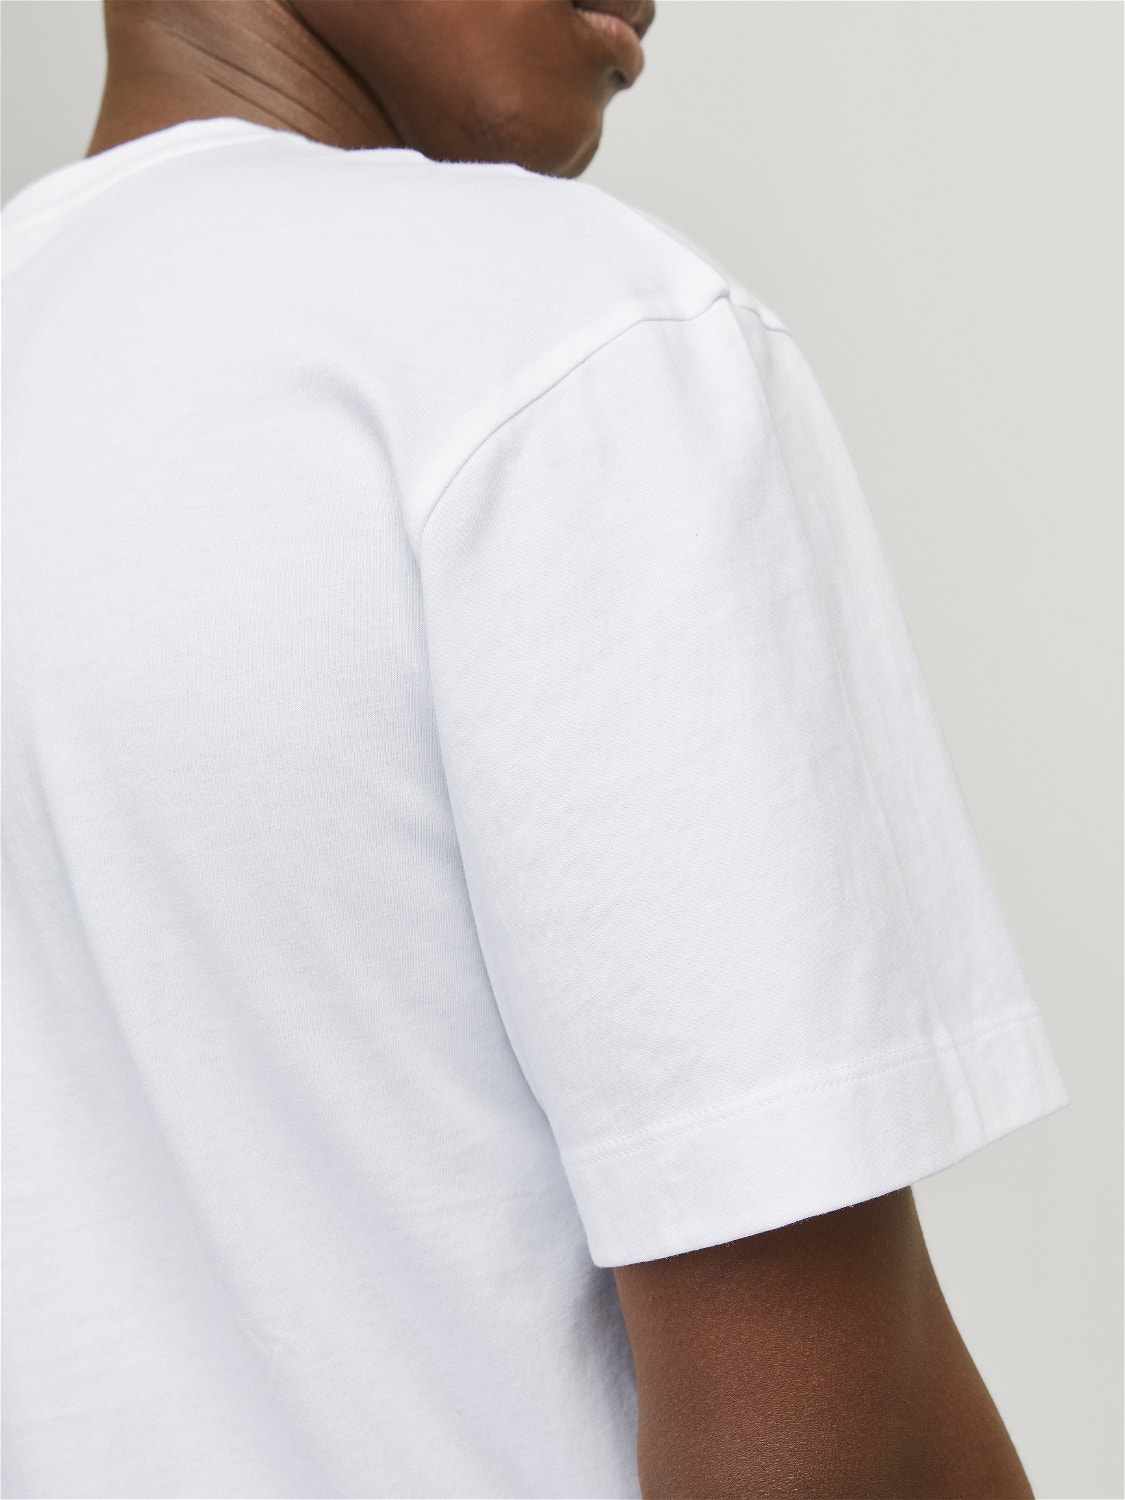 Jack & Jones Camiseta Estampado Cuello redondo -White - 12256560